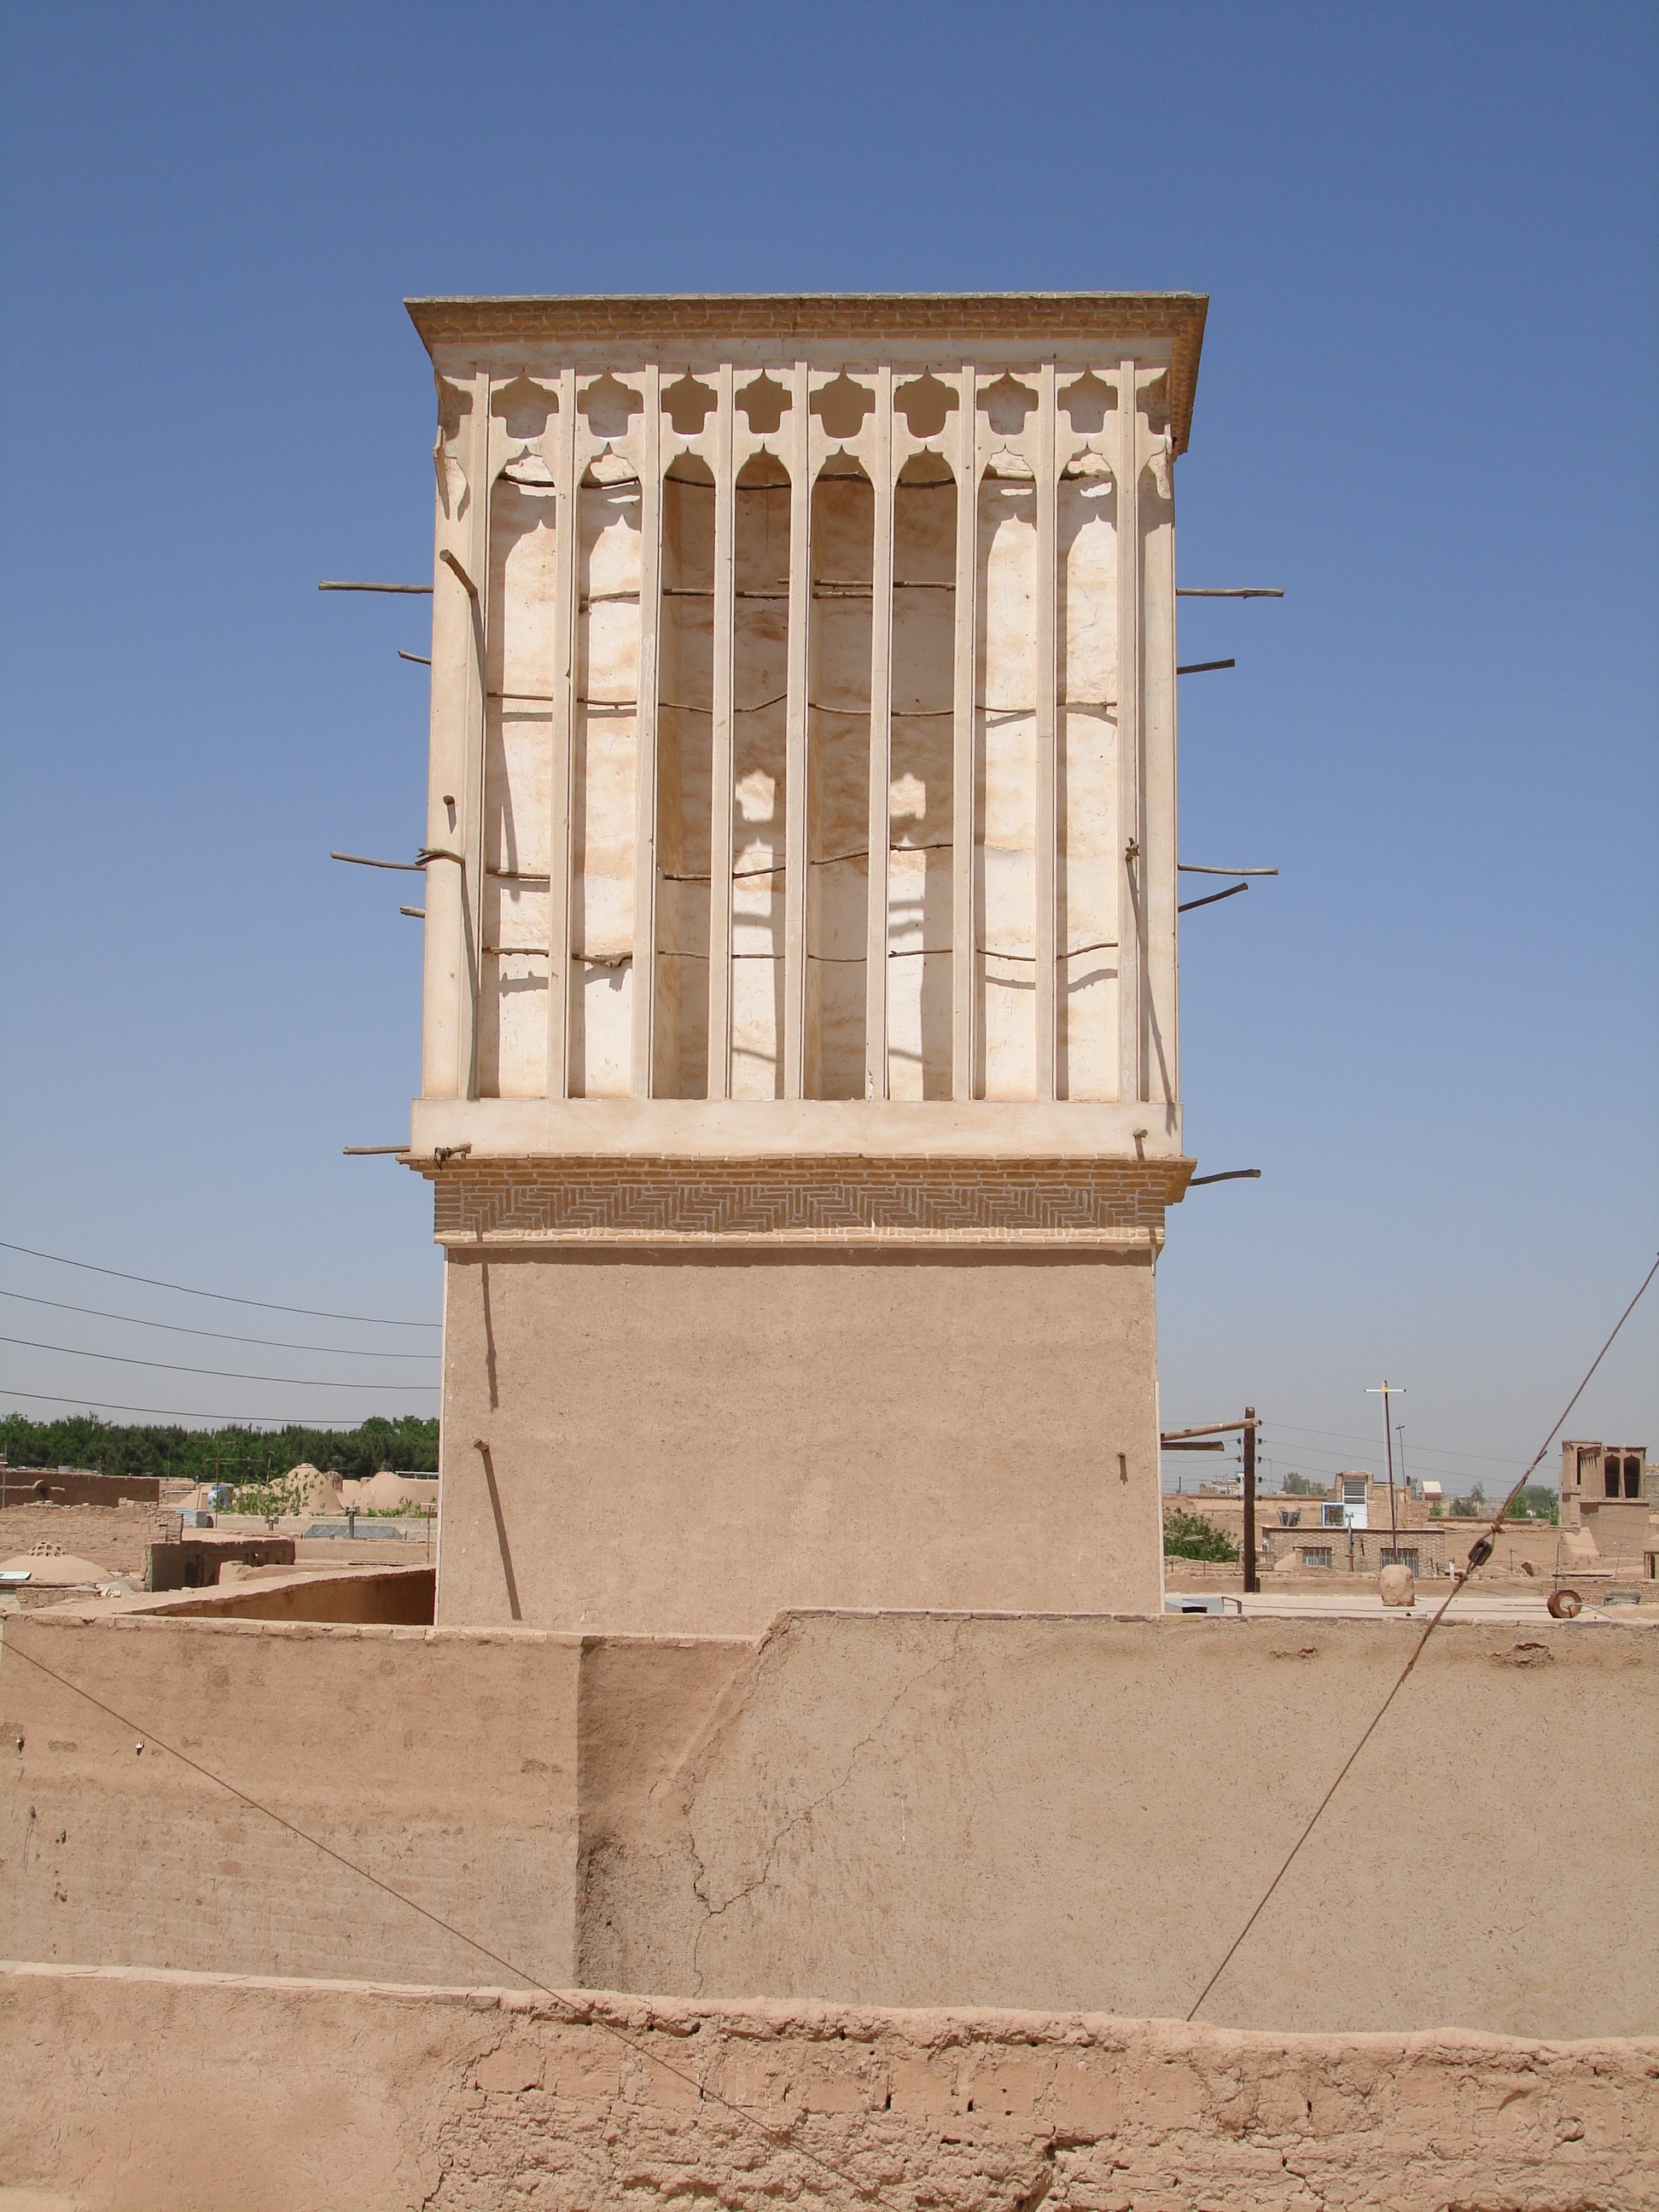 Badgir - a typical ventilation tower in Yazd